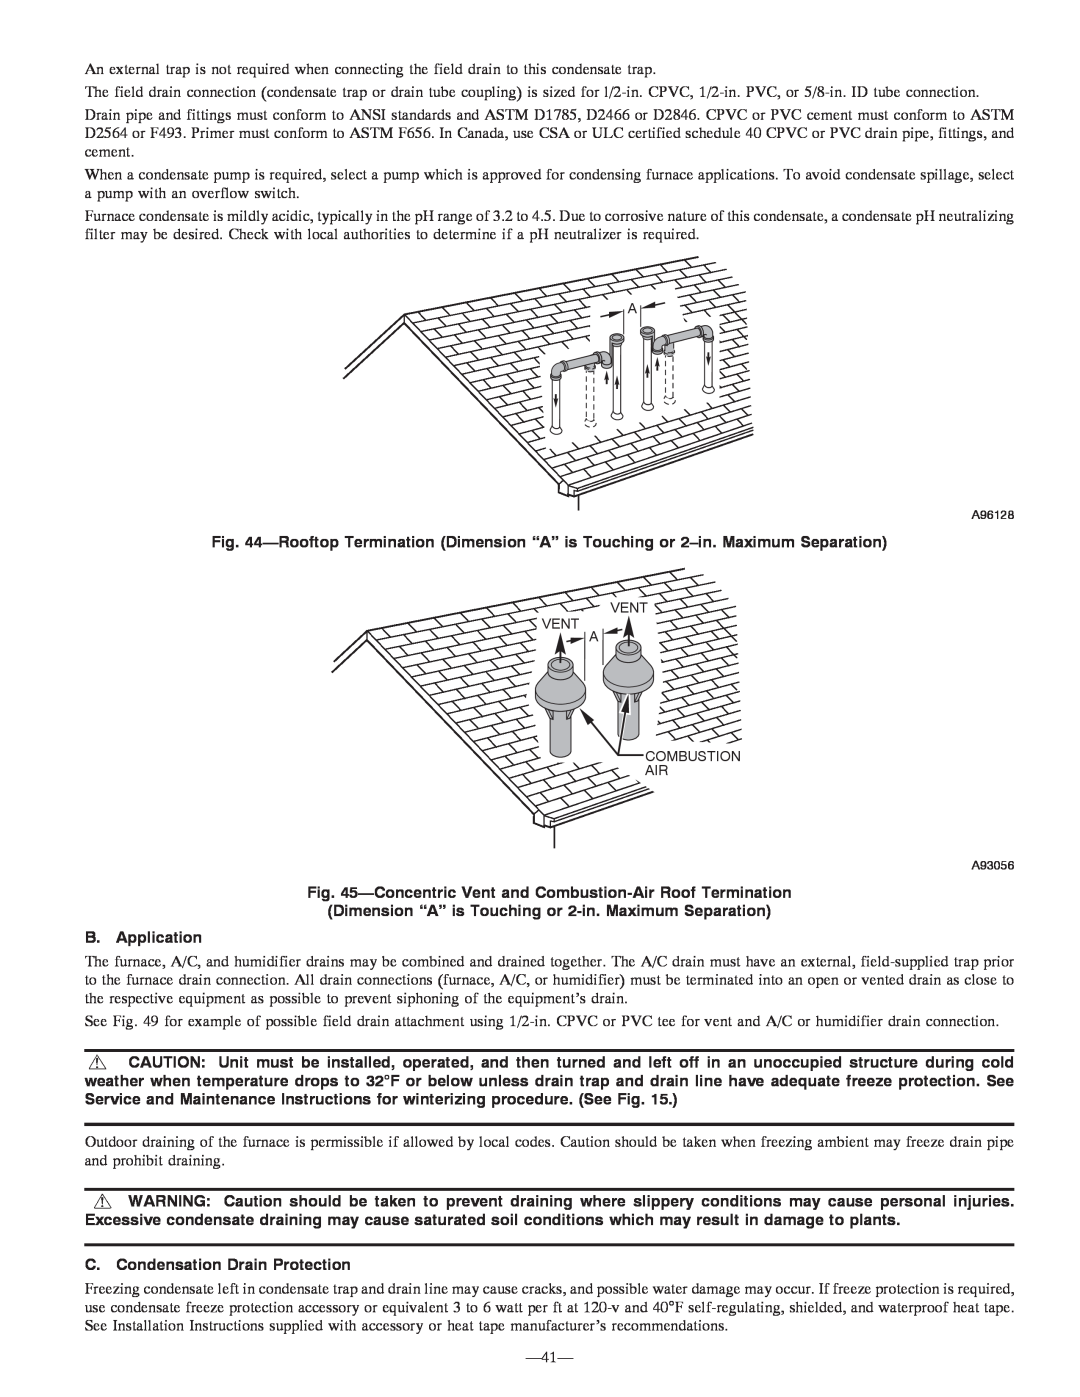 Bryant 355MAV instruction manual B. Application, C. Condensation Drain Protection 